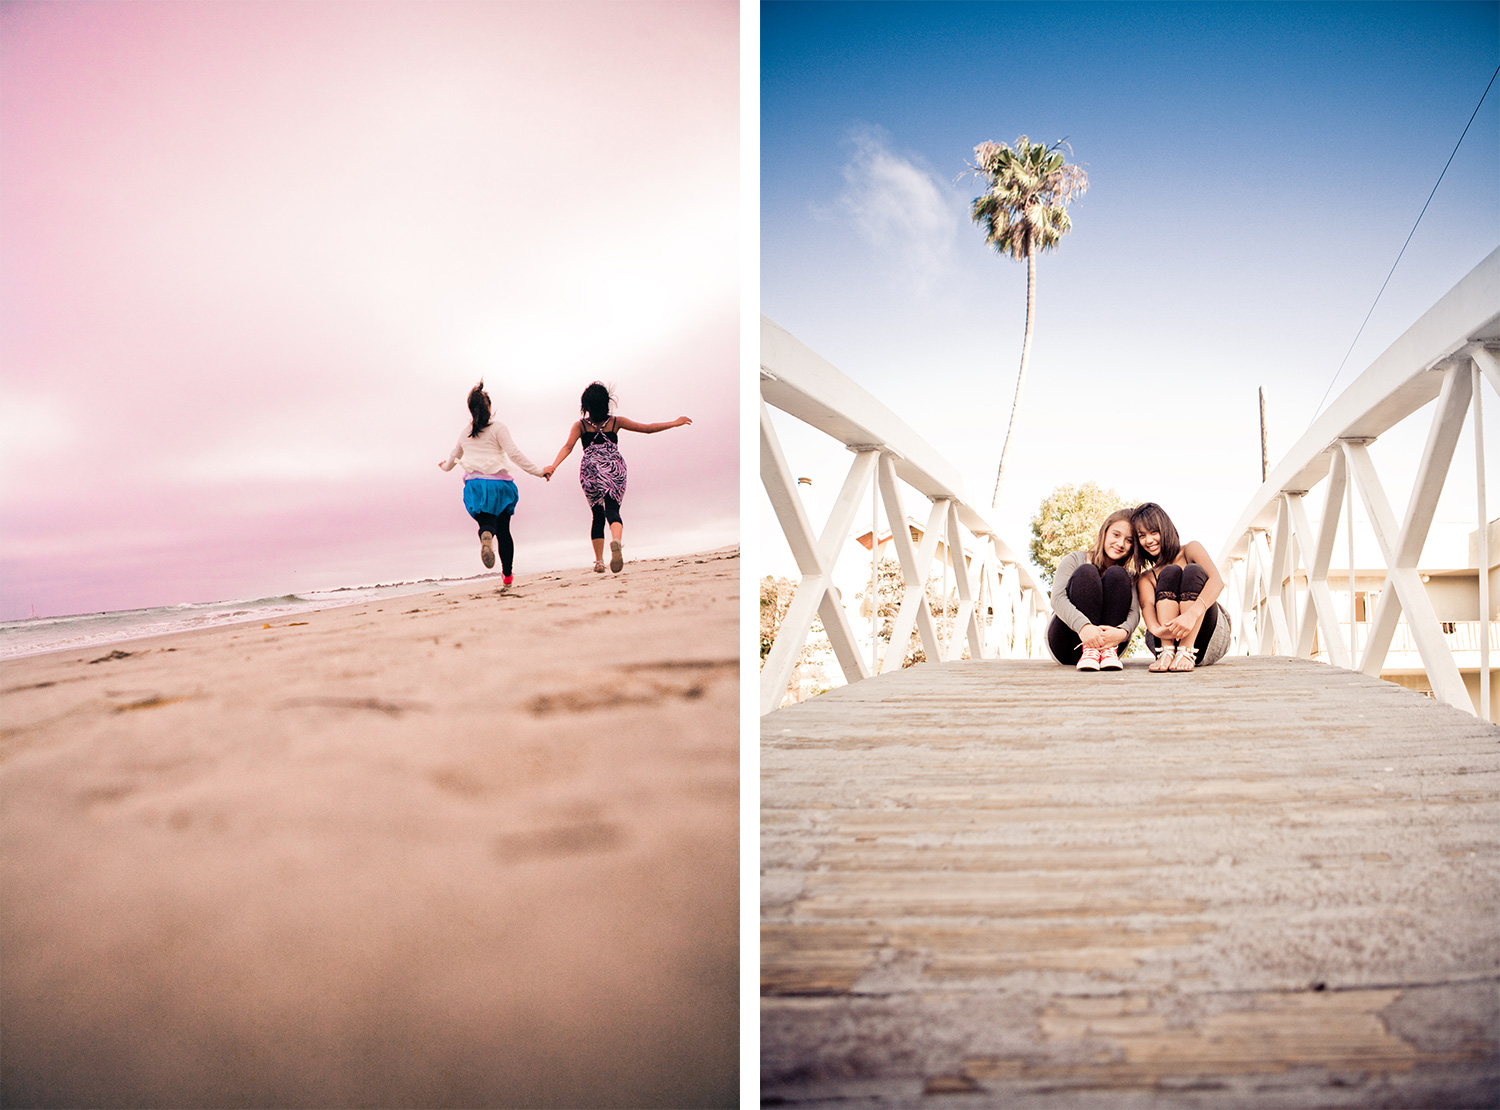 Venice Beach Portraits | Stephen Grant Photography